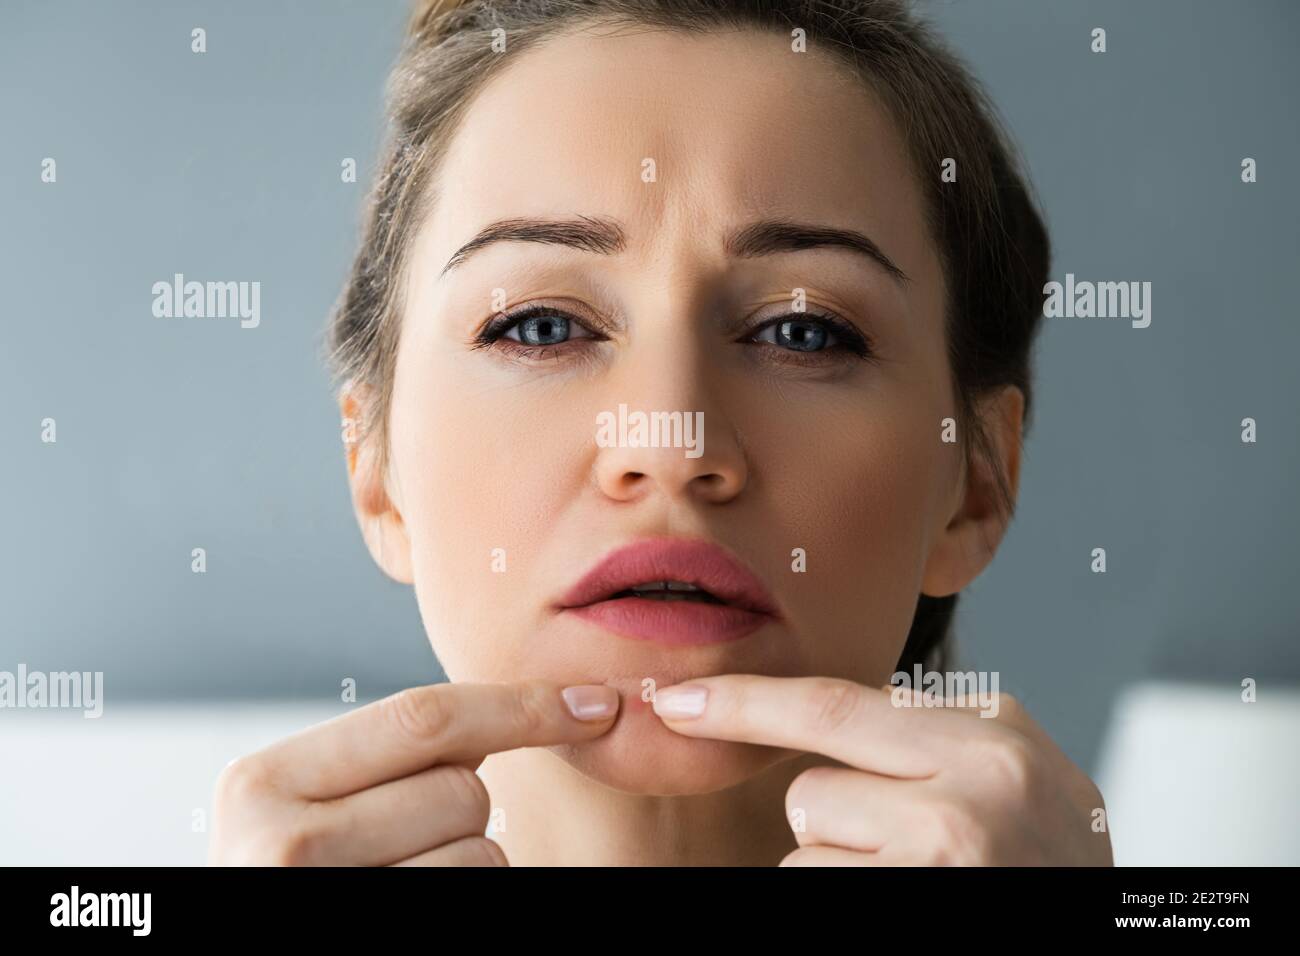 Woman Cheek At Pimple Dermatology Skin Problem Stock Photo